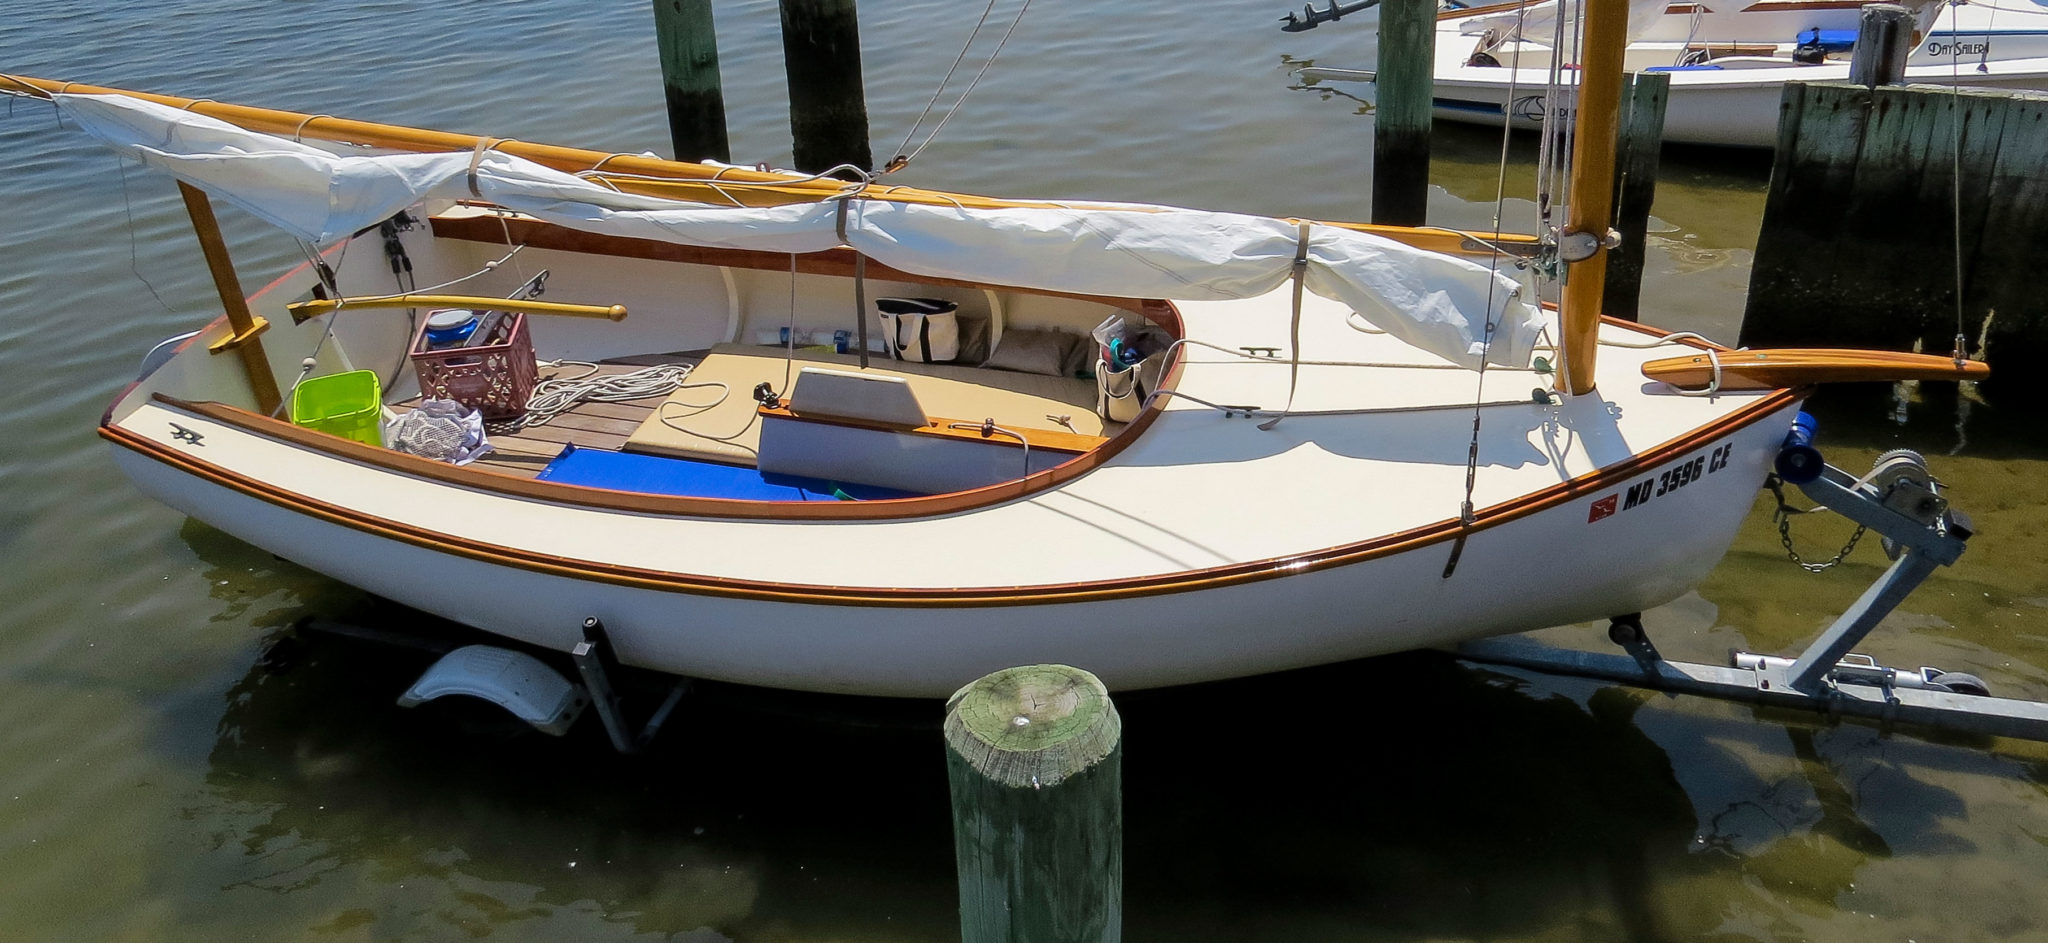 marsh cat sailboat plans